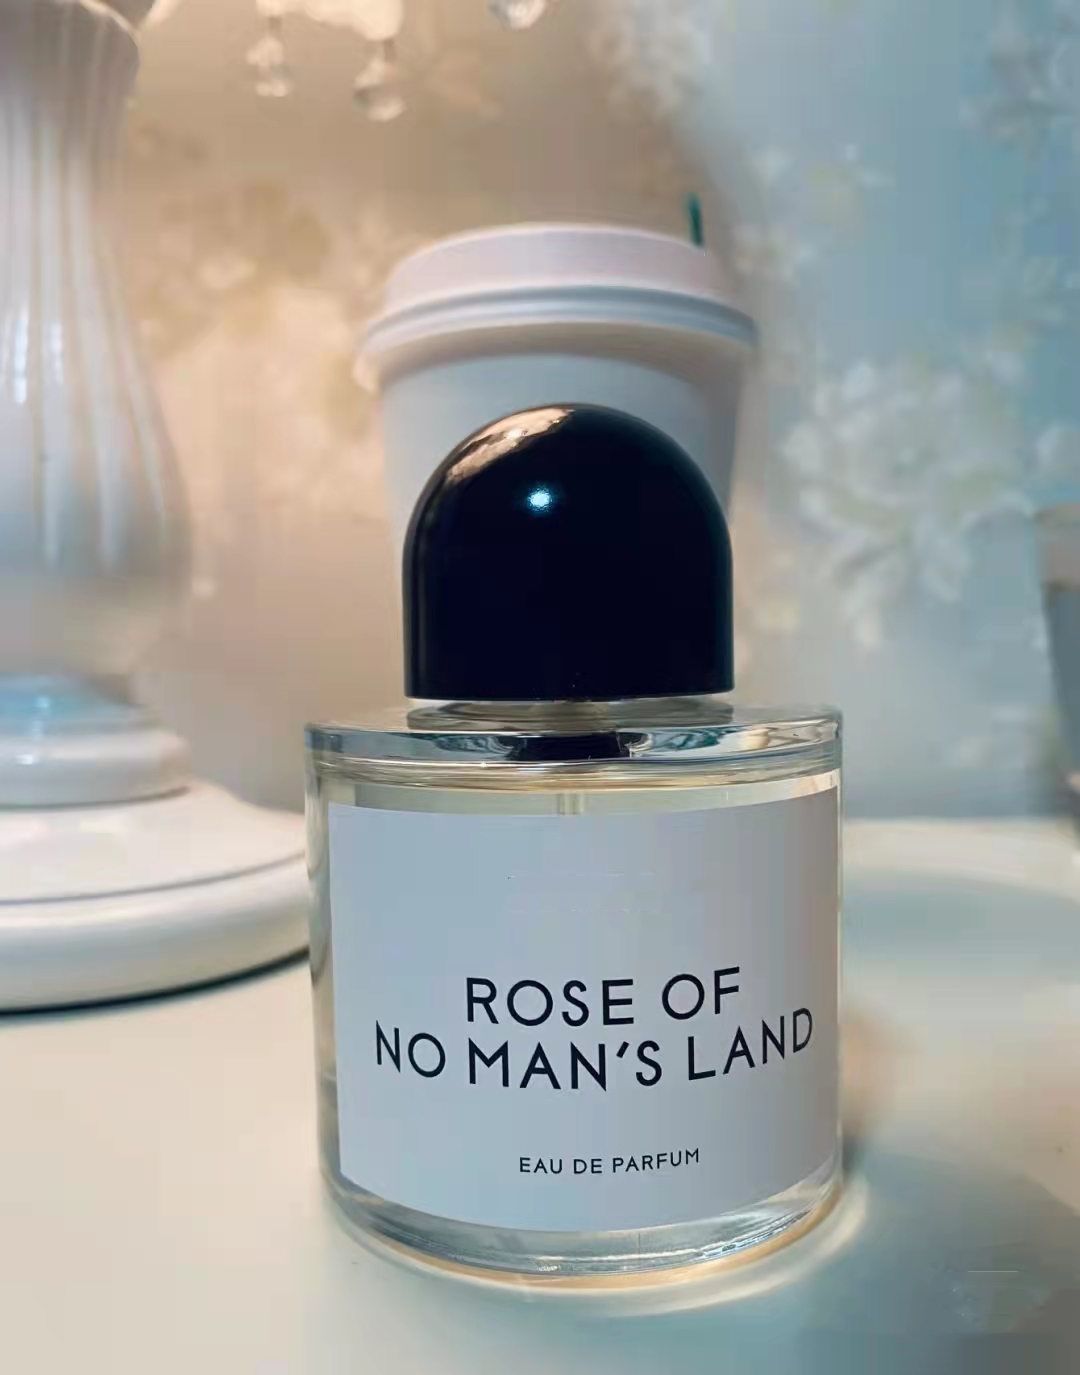 Rose de ninguna tierra de hombre